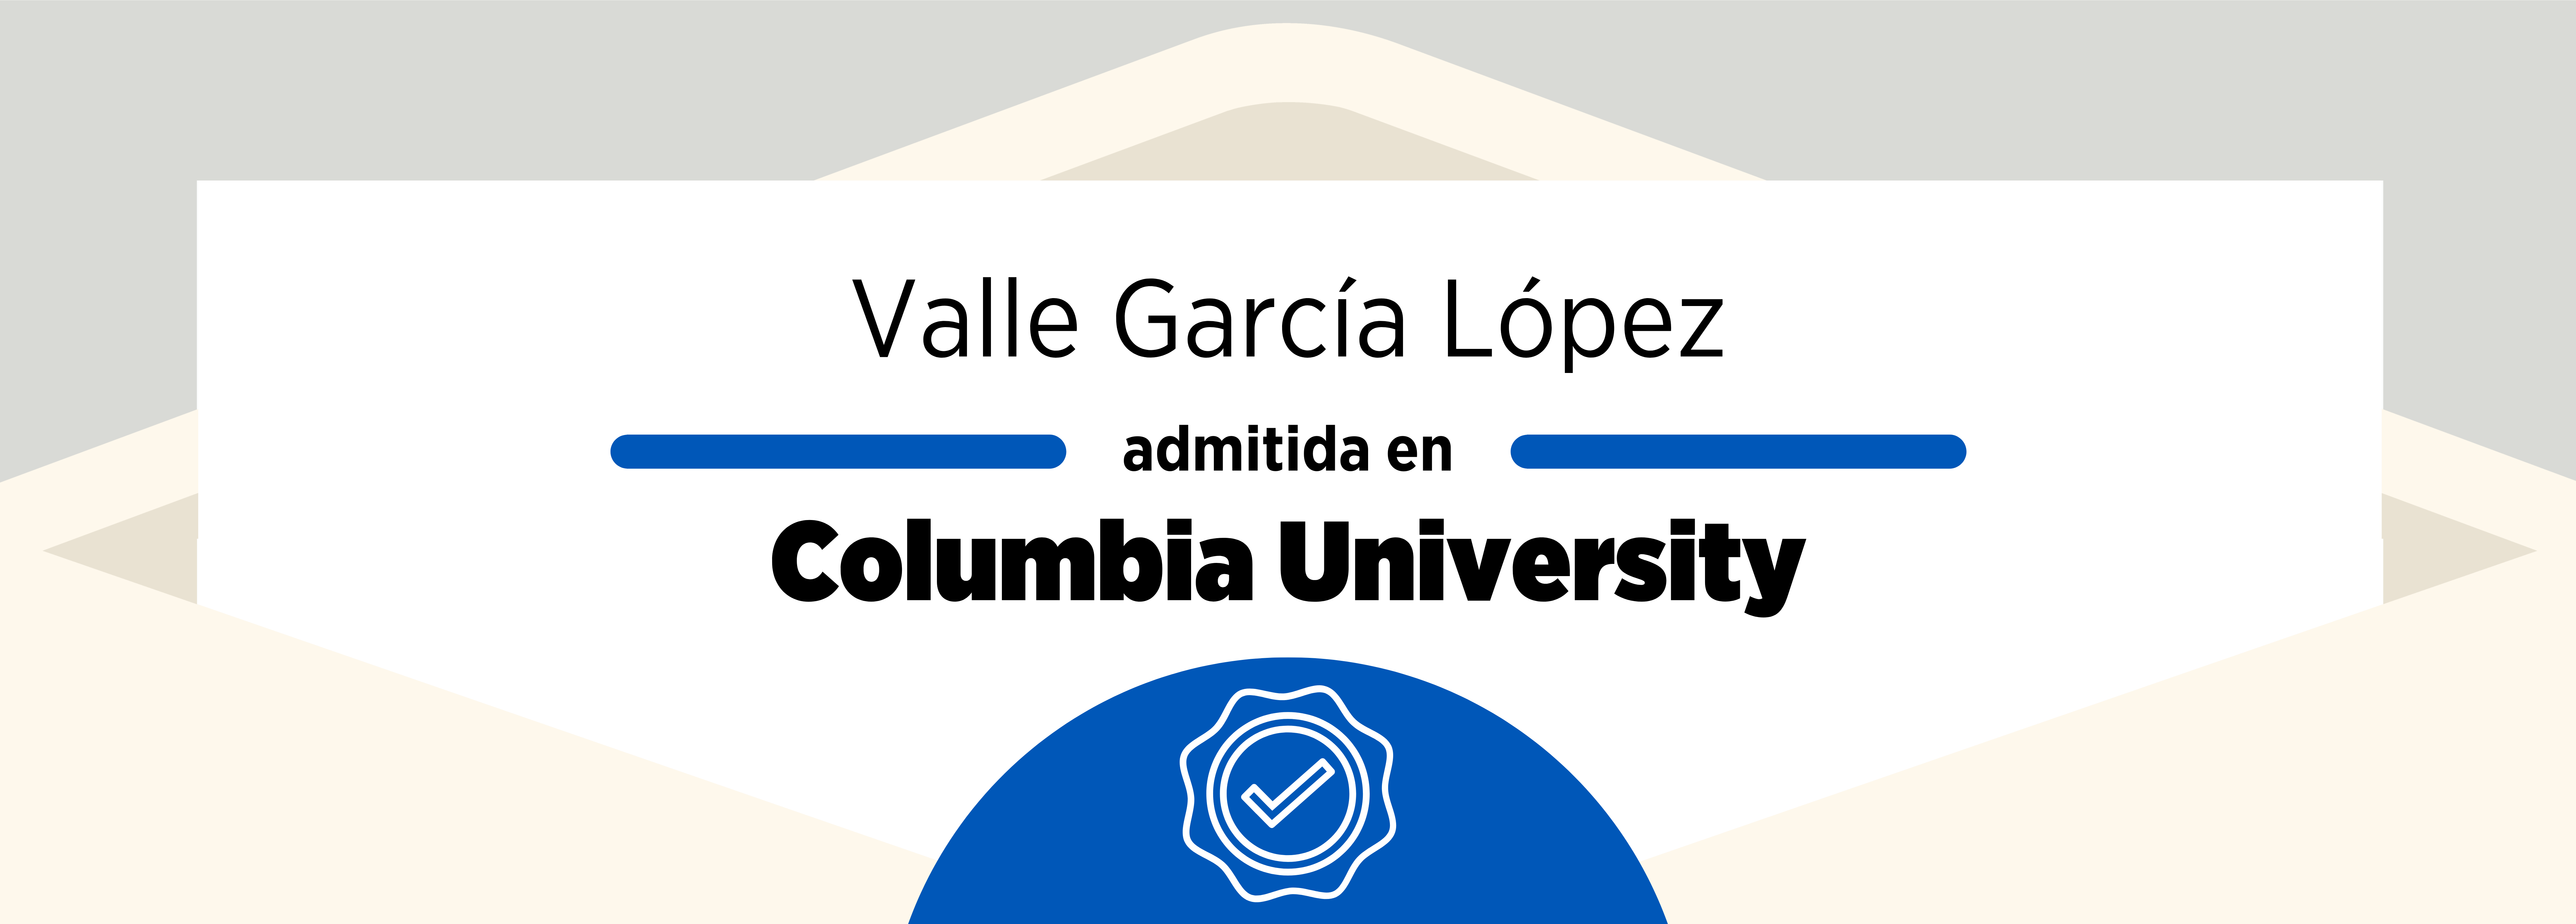 Admission 2020: Valle García López & Columbia University